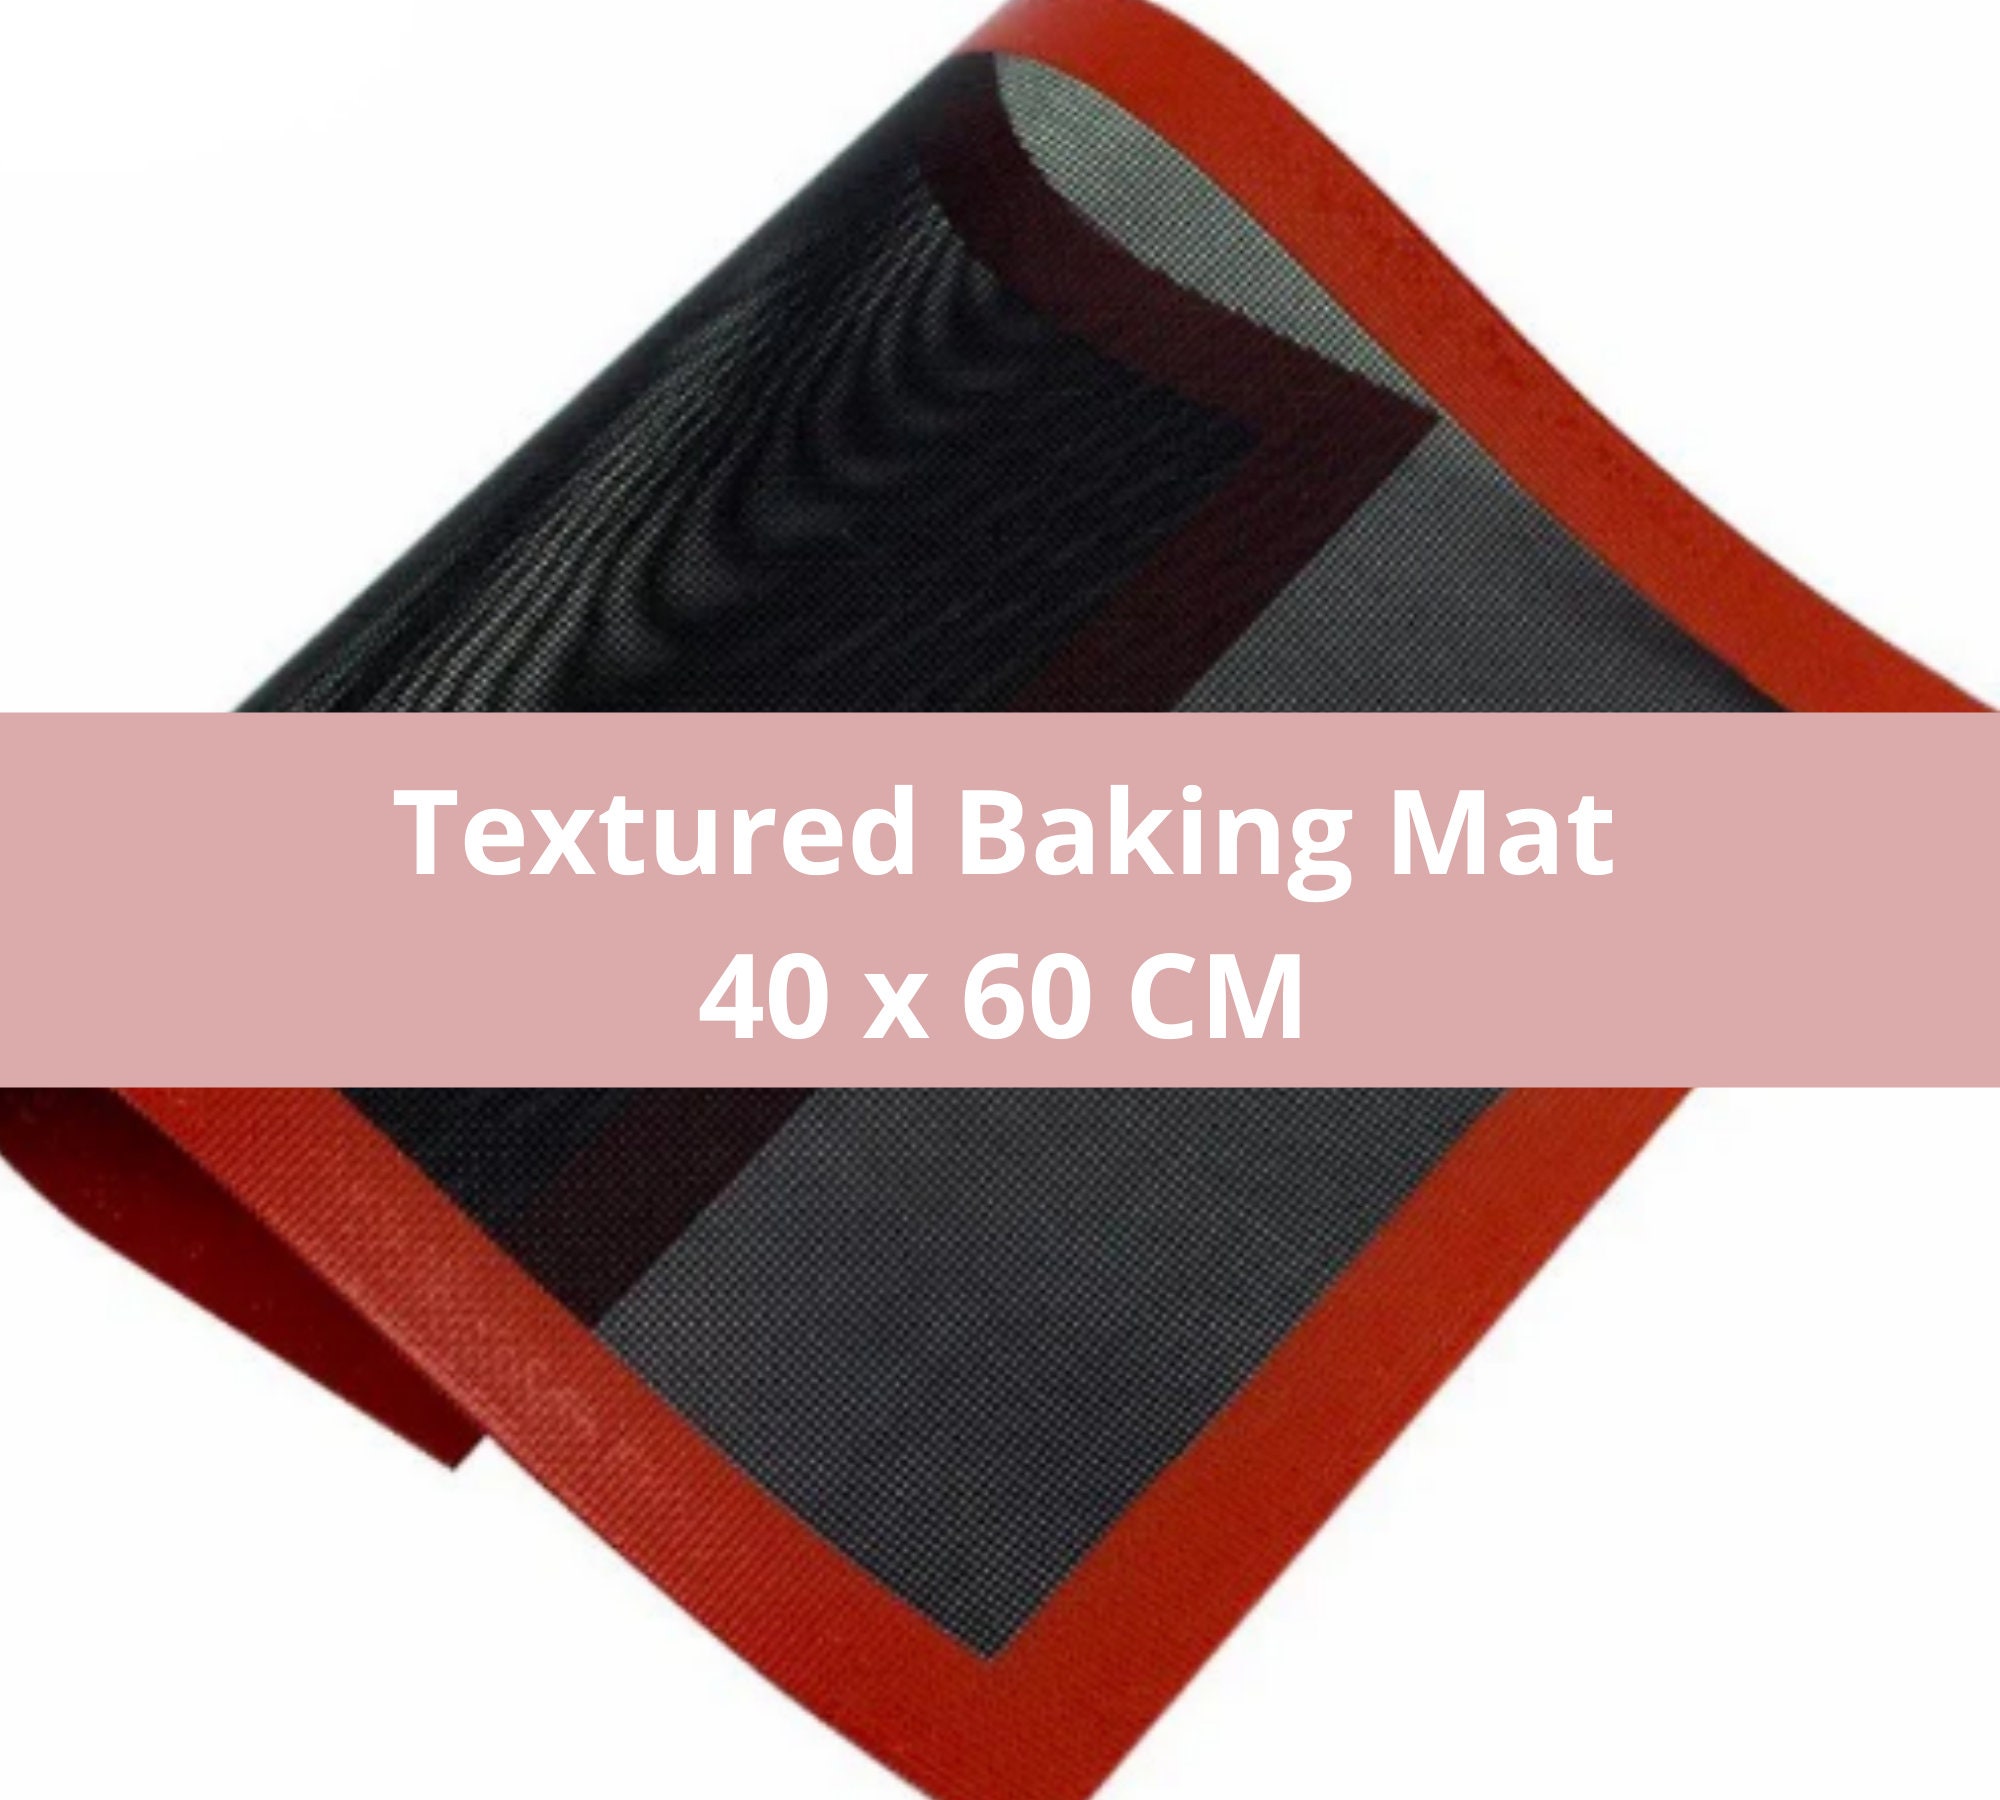 Reusable Silicone Baking Liner, Baking Sheet, Baking Tray 